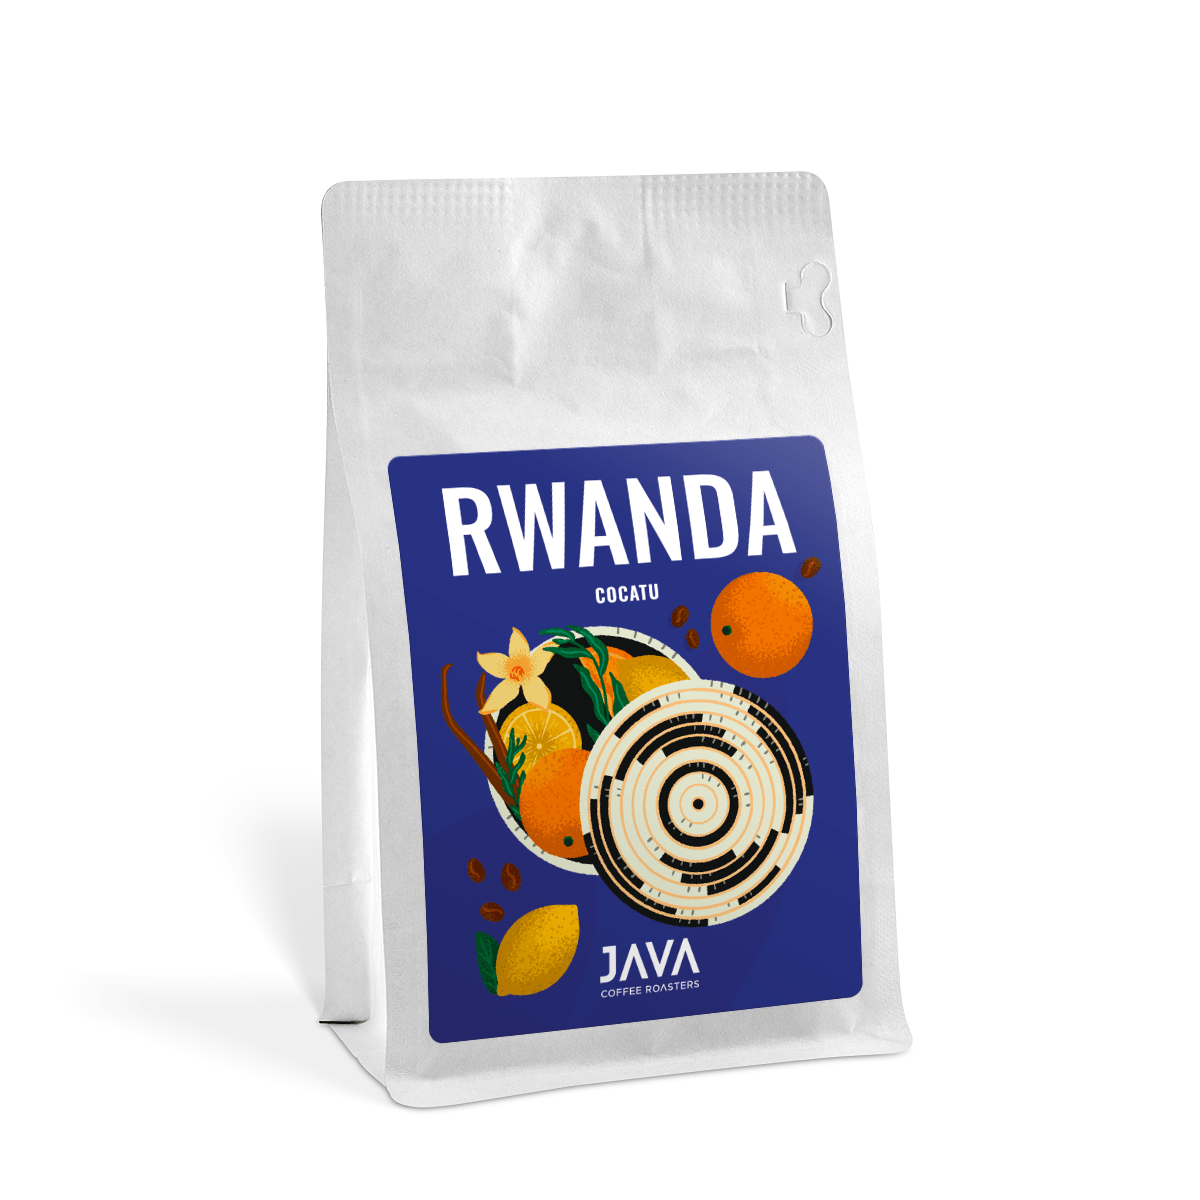 Rwanda Cocatu